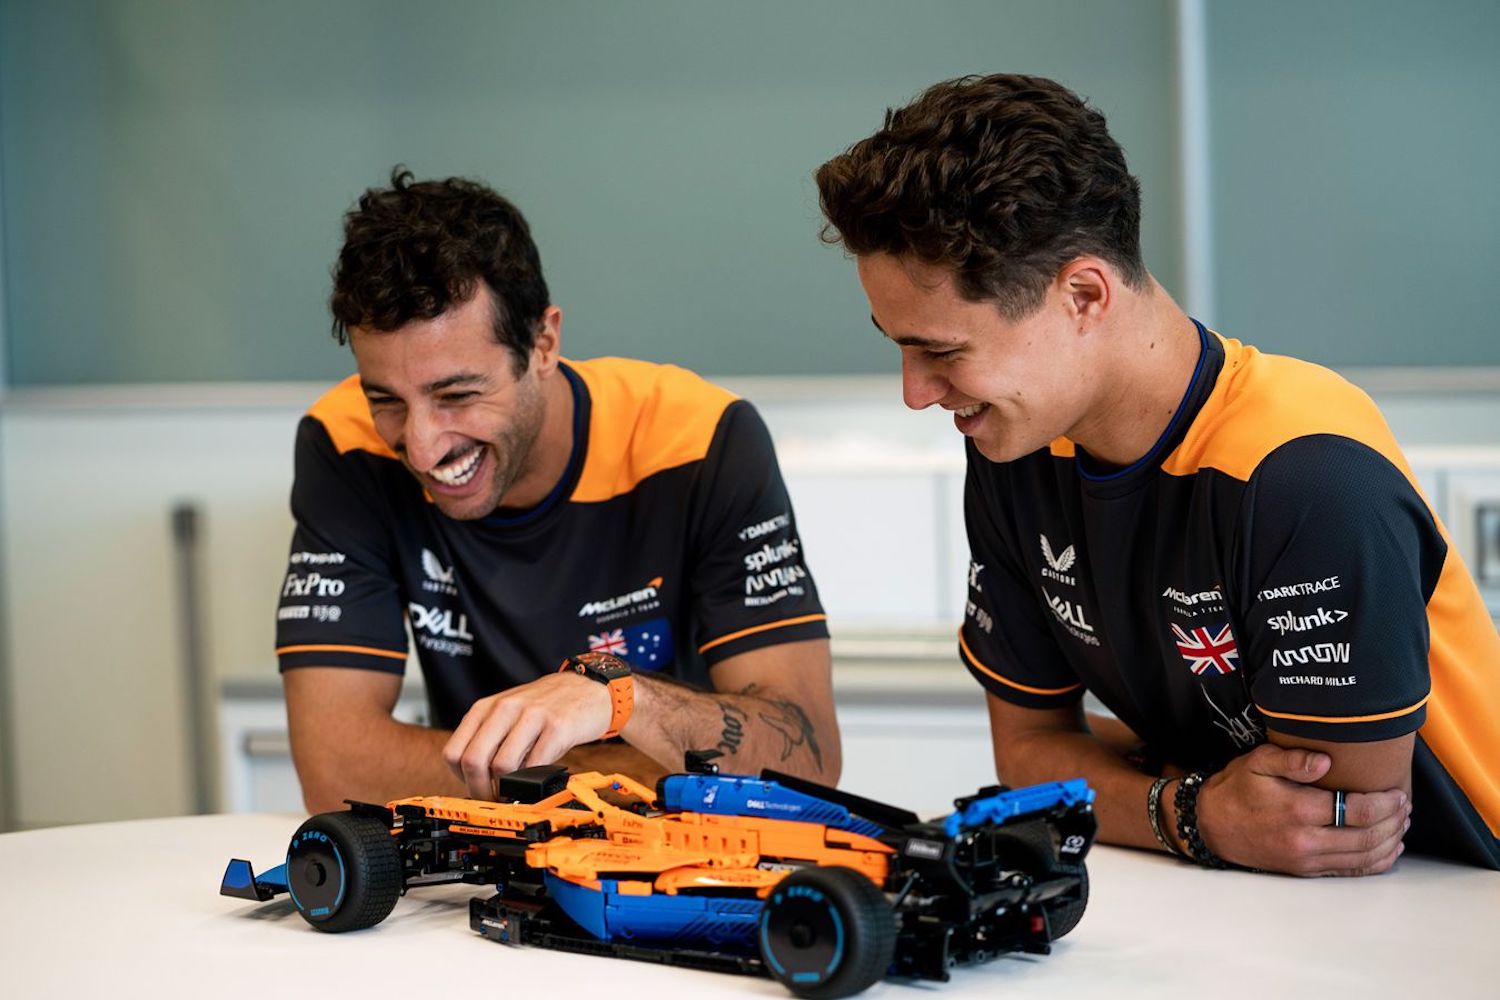 Lego Technic McLaren Formula 1 Race Car car and motoring news by